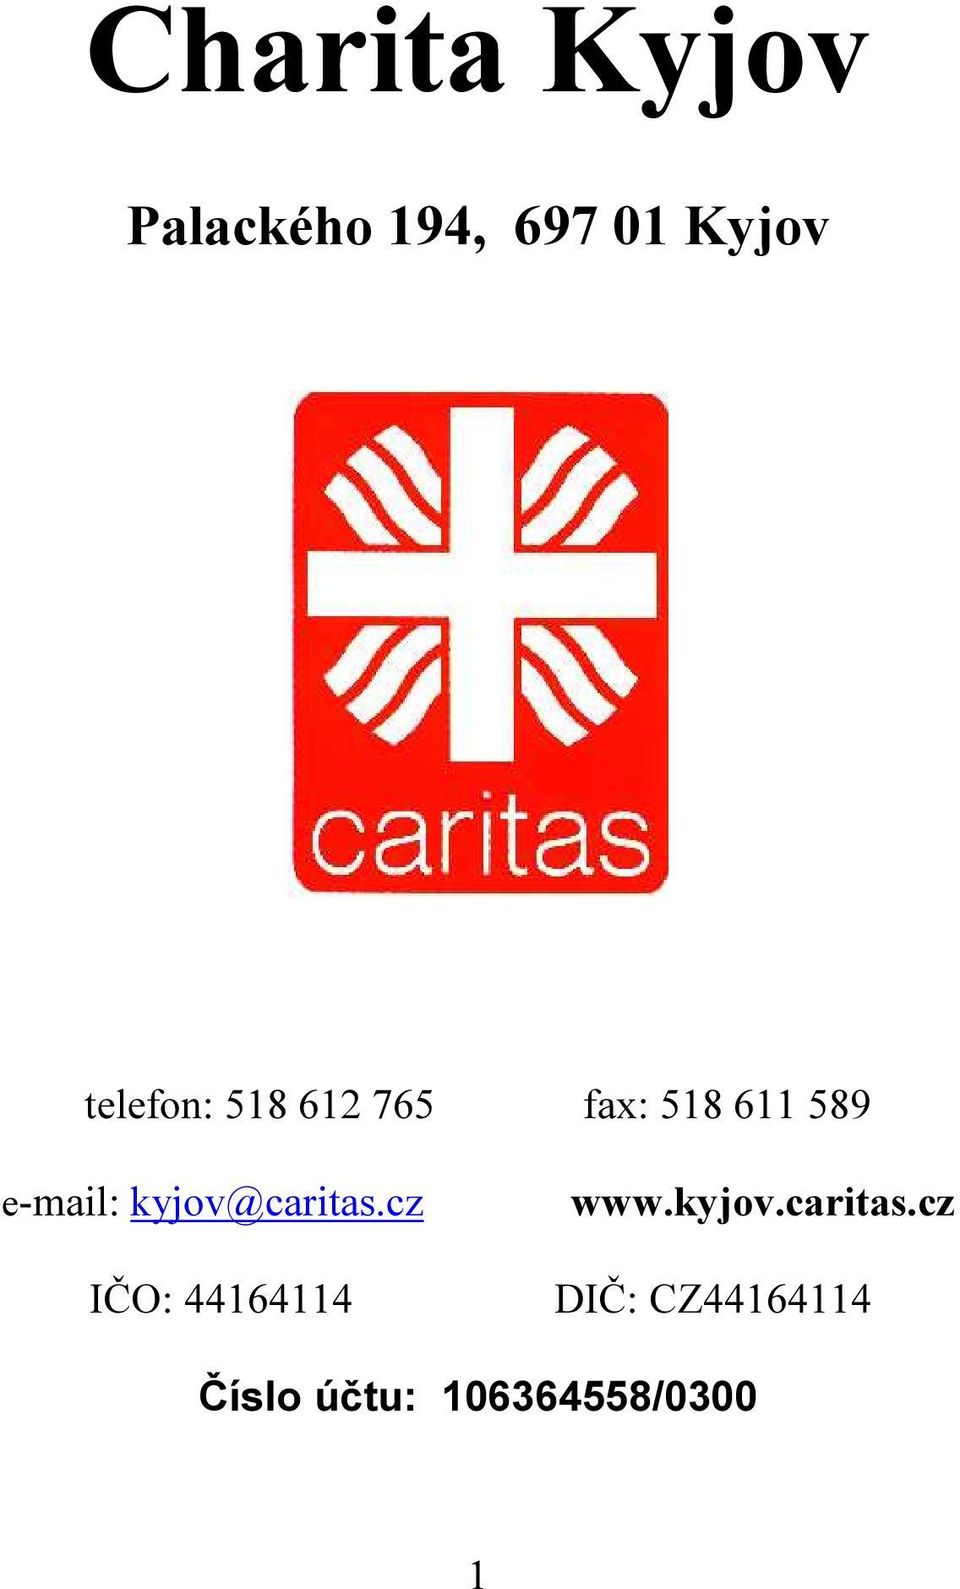 kyjov@caritas.